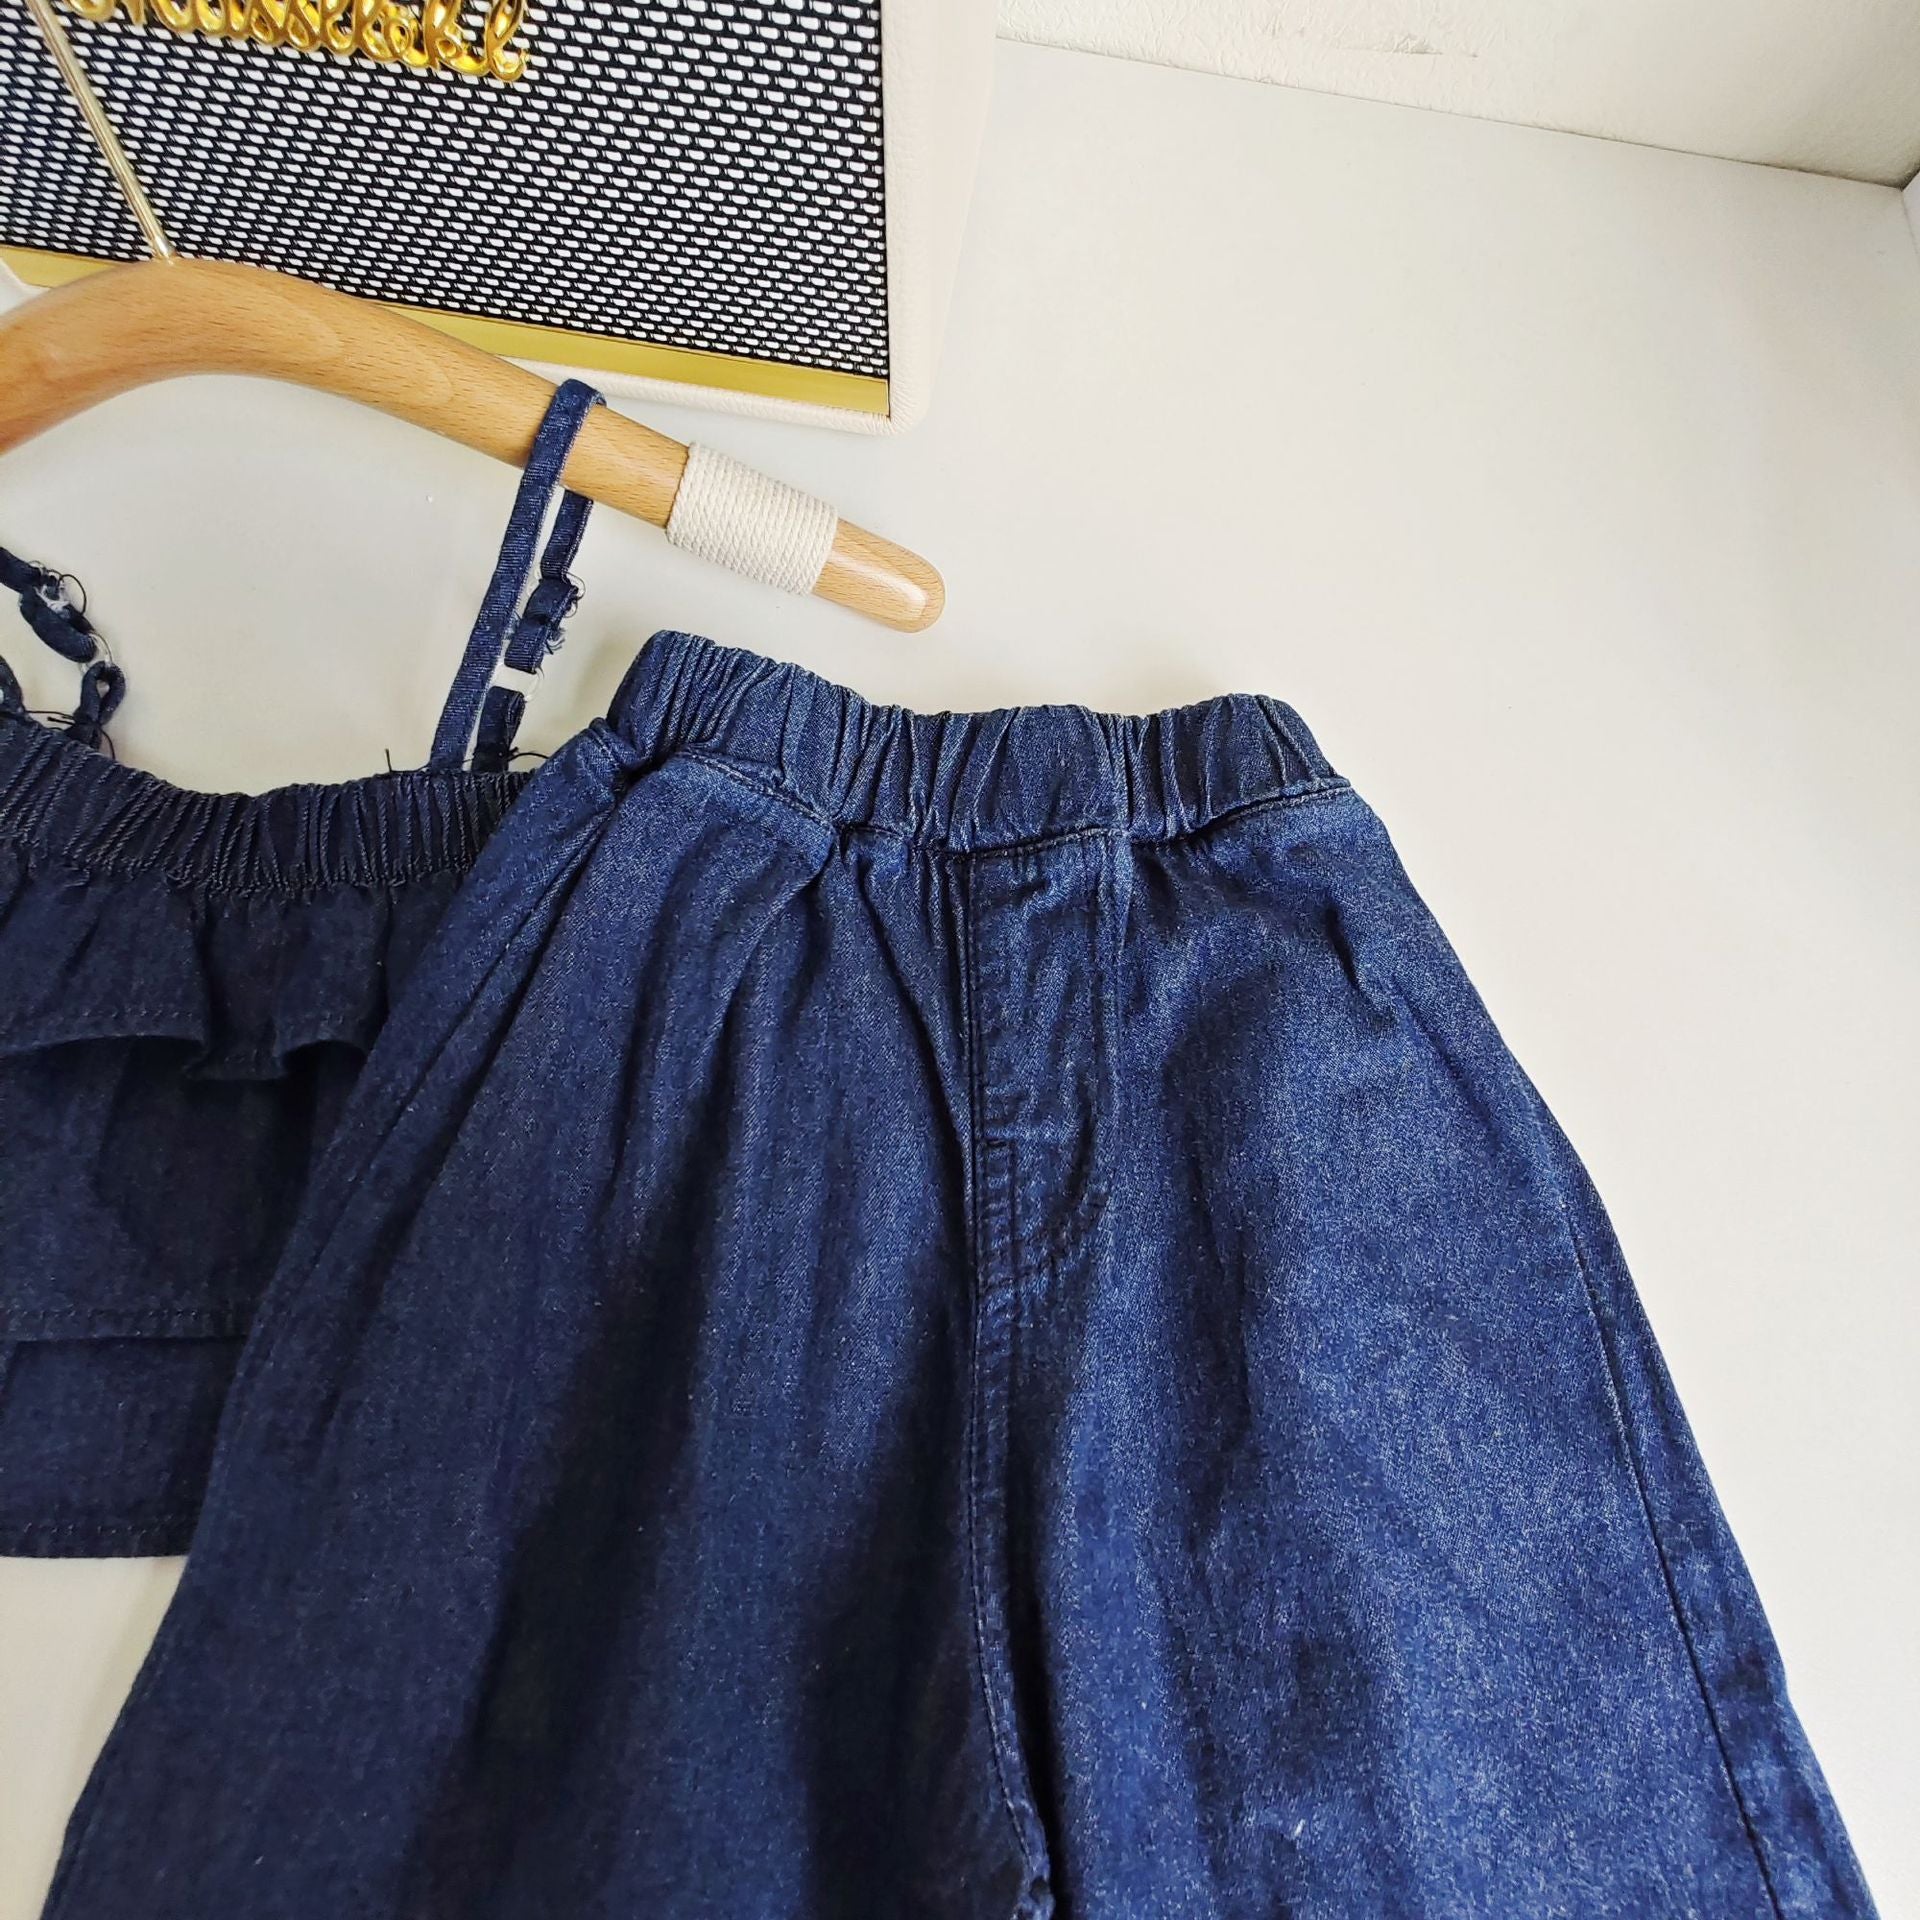 [363612] - Setelan Crop Top Kutung Celana Jeans Import Anak Perempuan - Motif Plain Bend